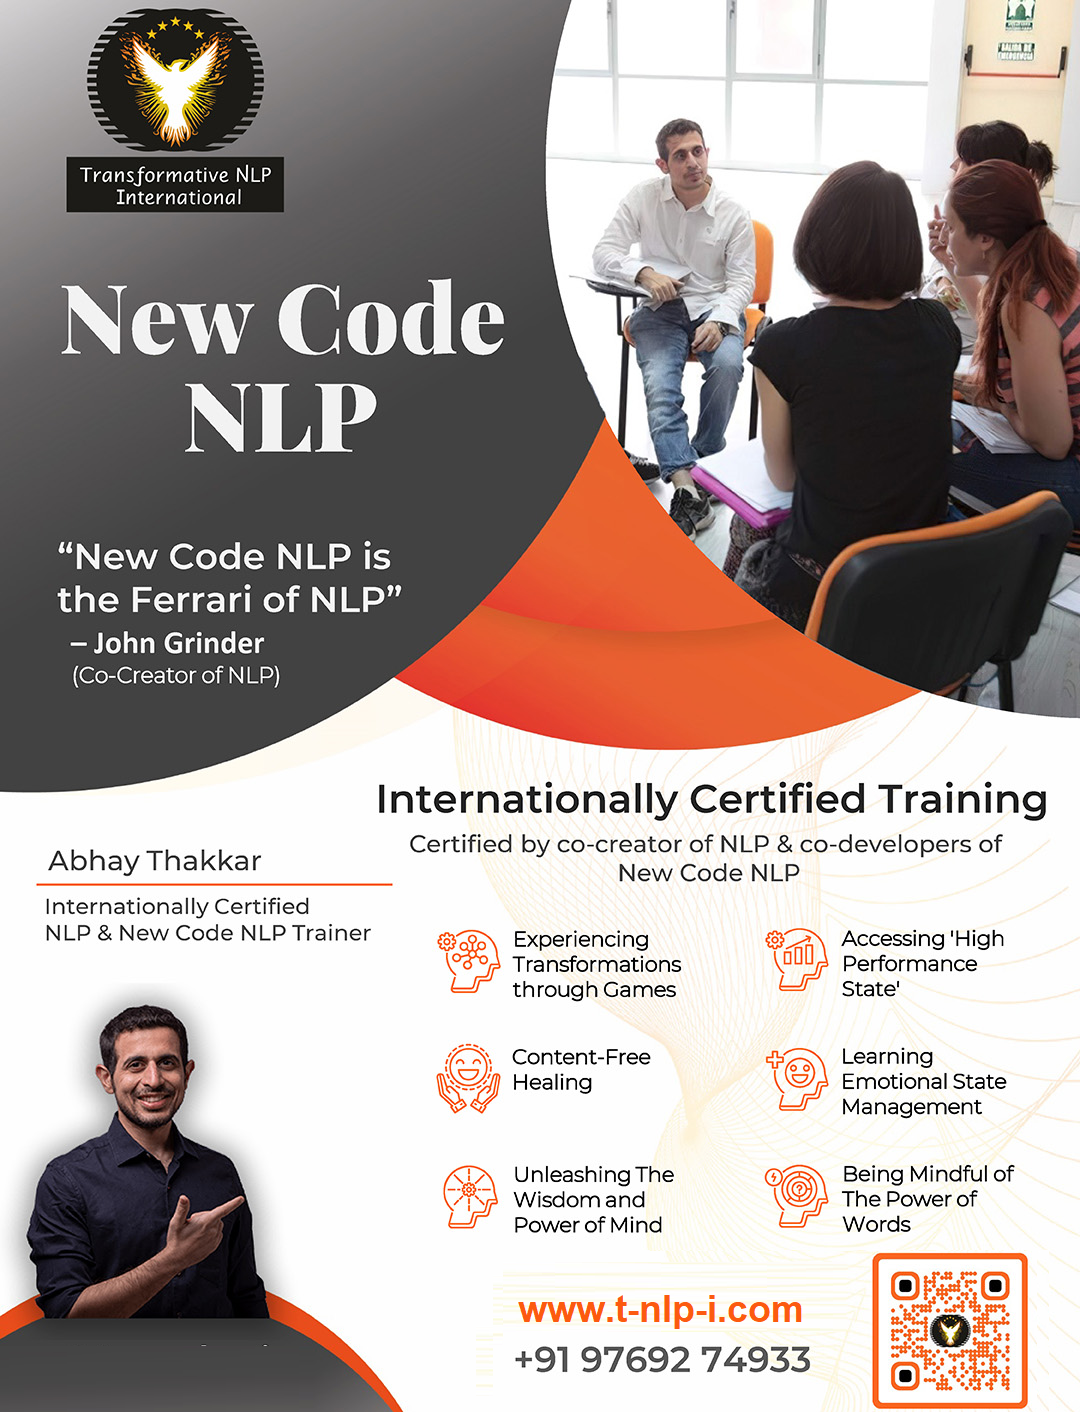 Internationally Certified New Code NLP Training by Abhay Thakkar - London